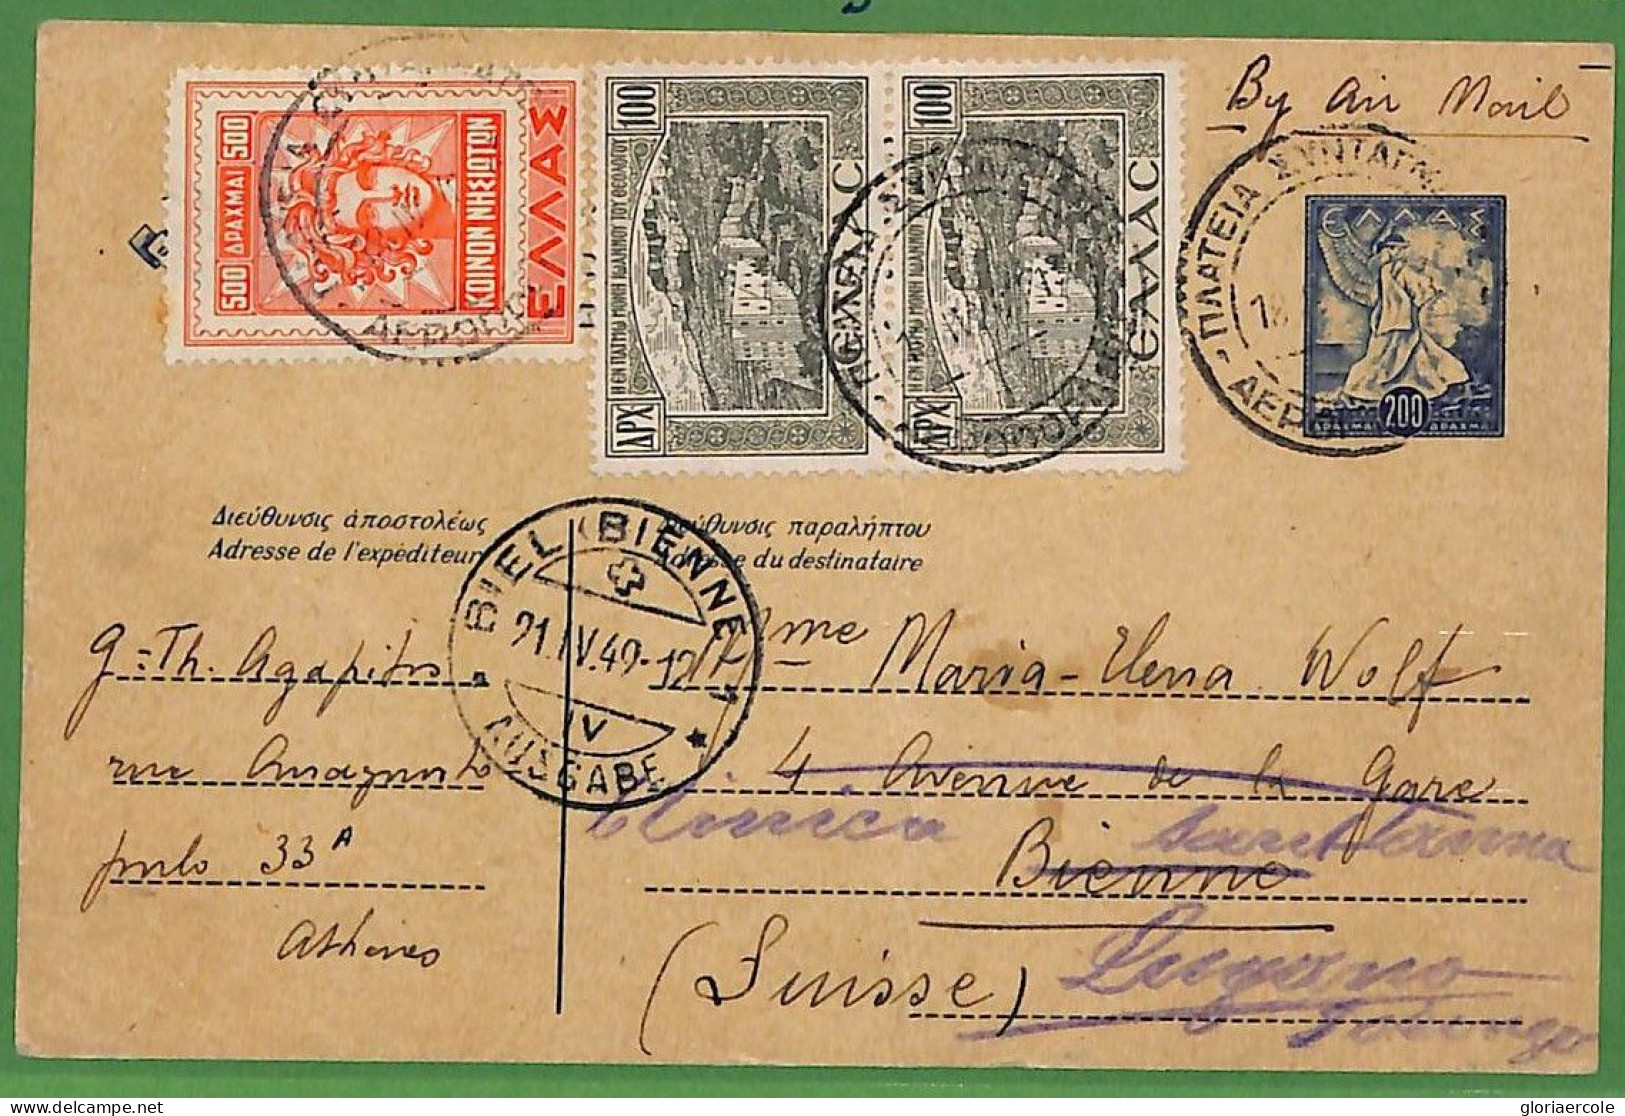 Ad0921 - GREECE - Postal History - Postal STATIONERY CARD Added Franking  To SWITZERLAND 1949 - Ganzsachen